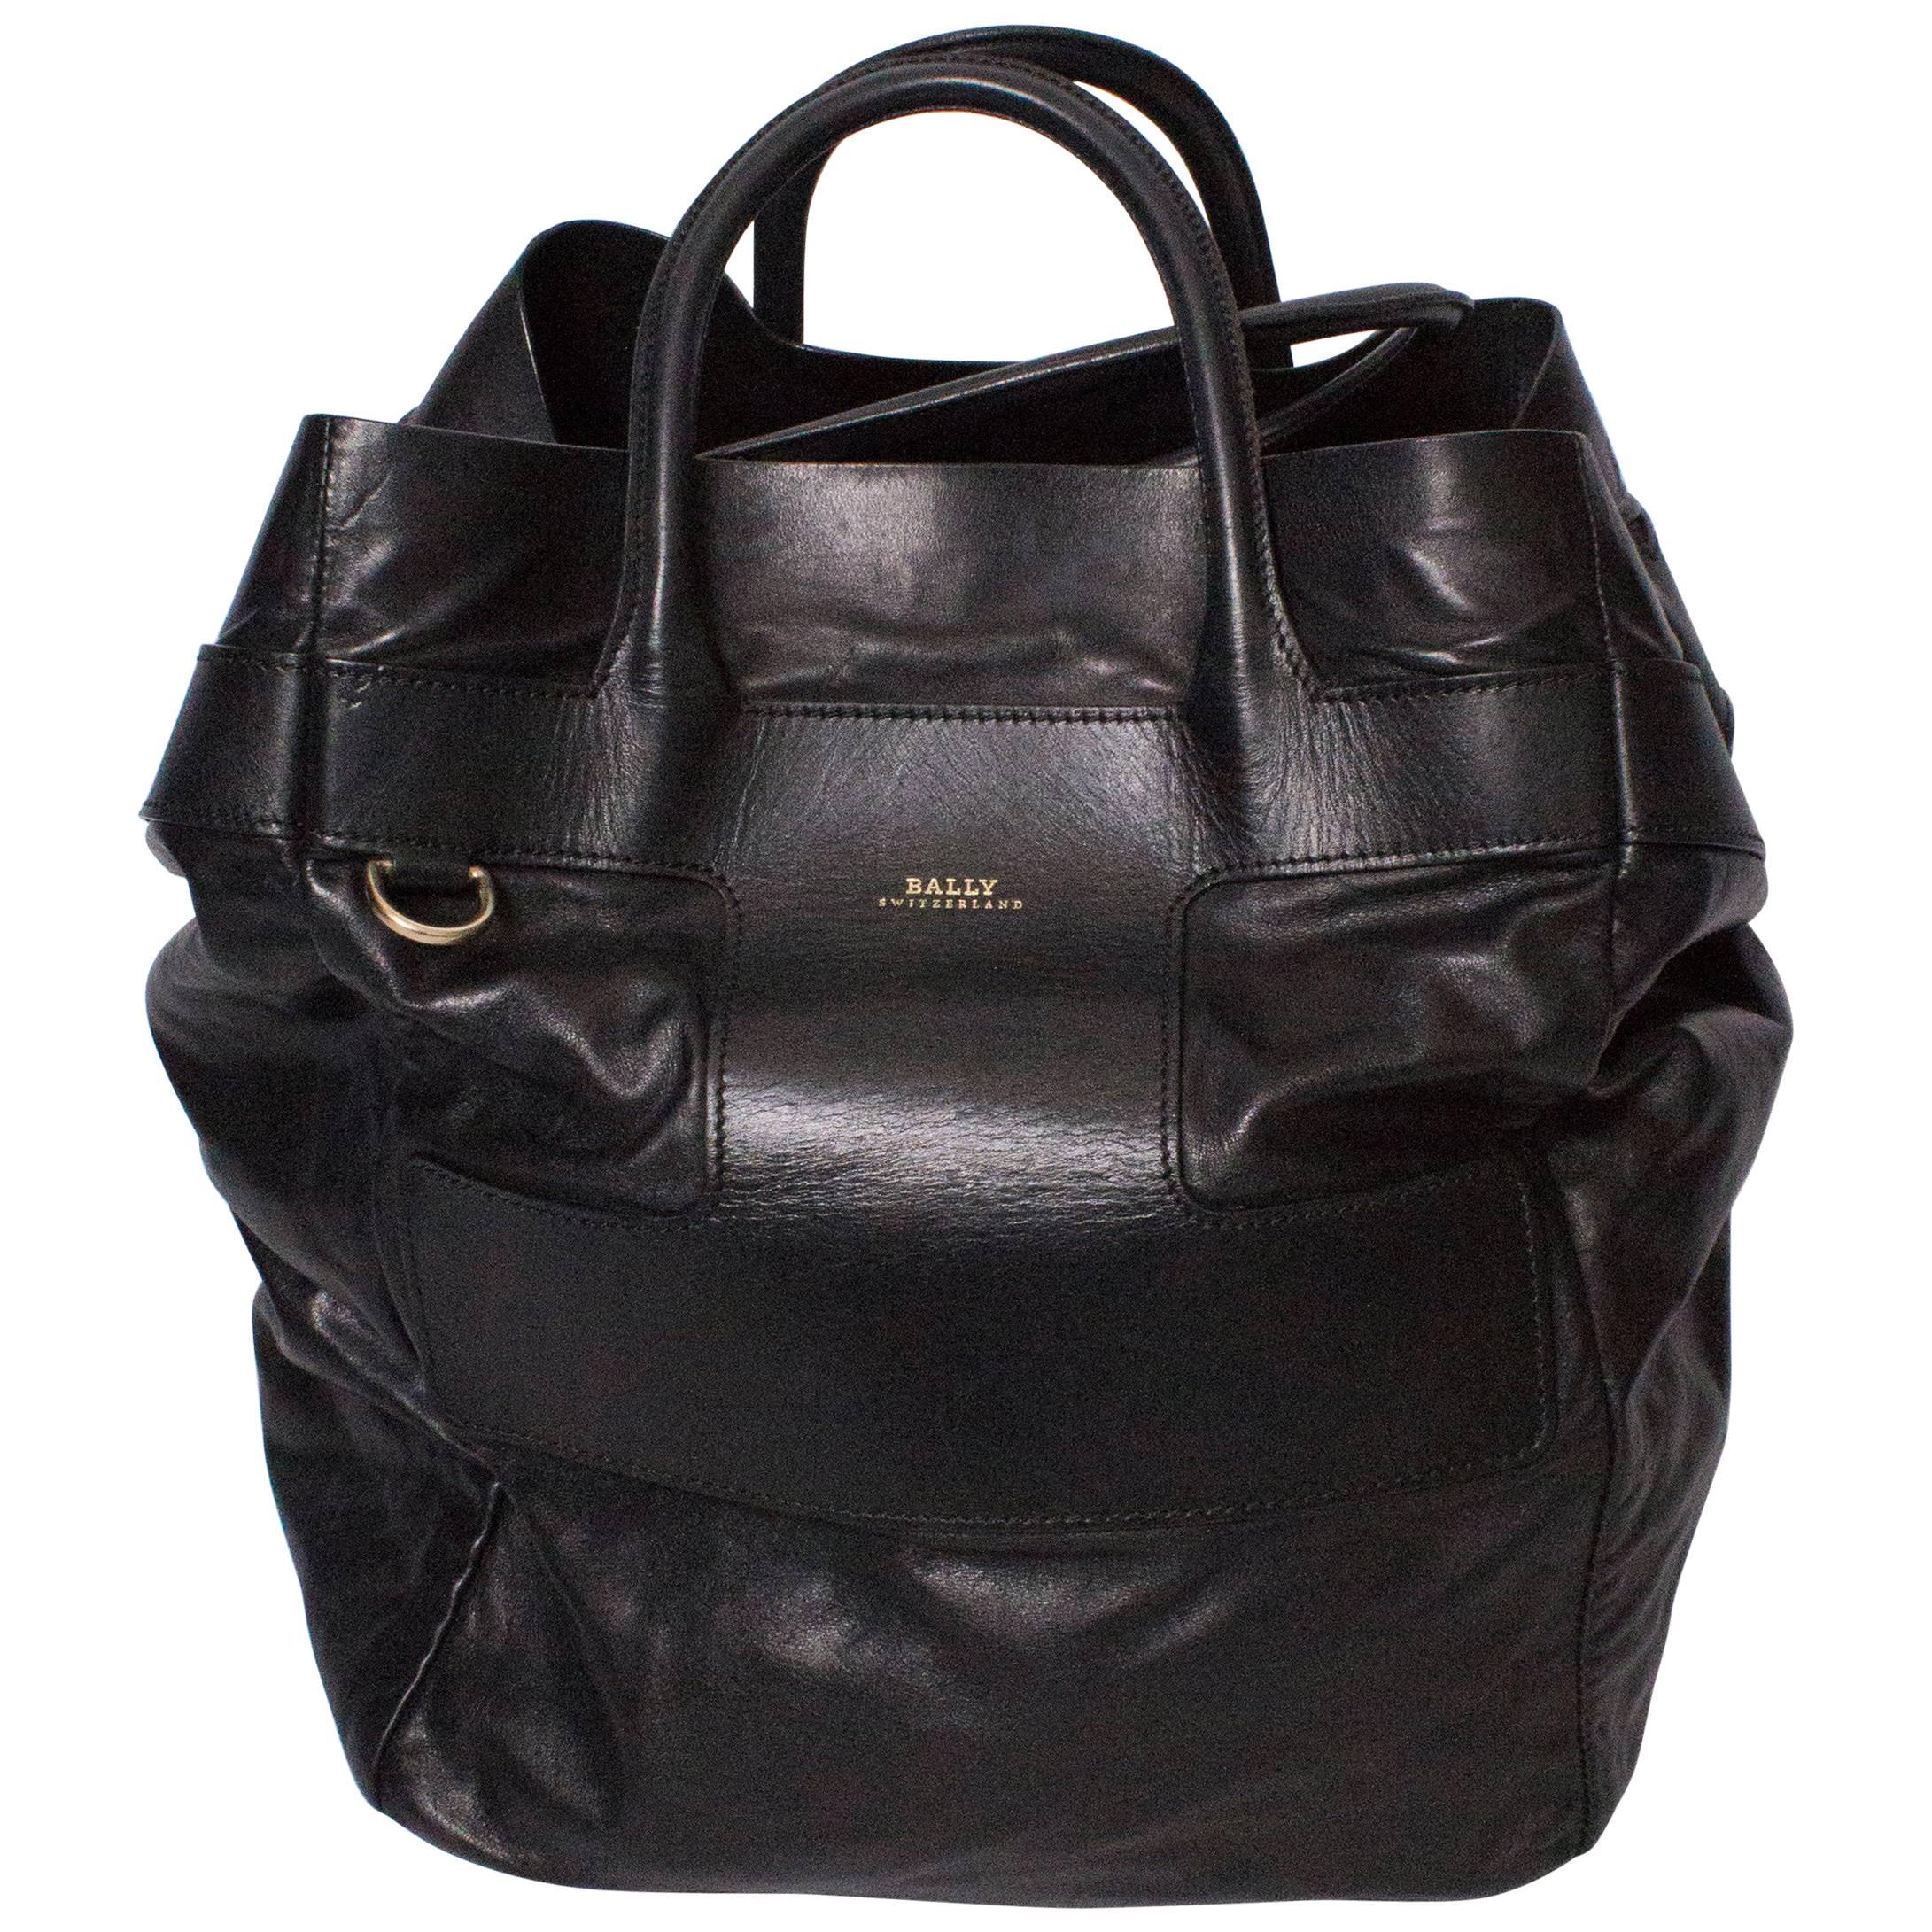 Bally Black Leather Bucket Bag